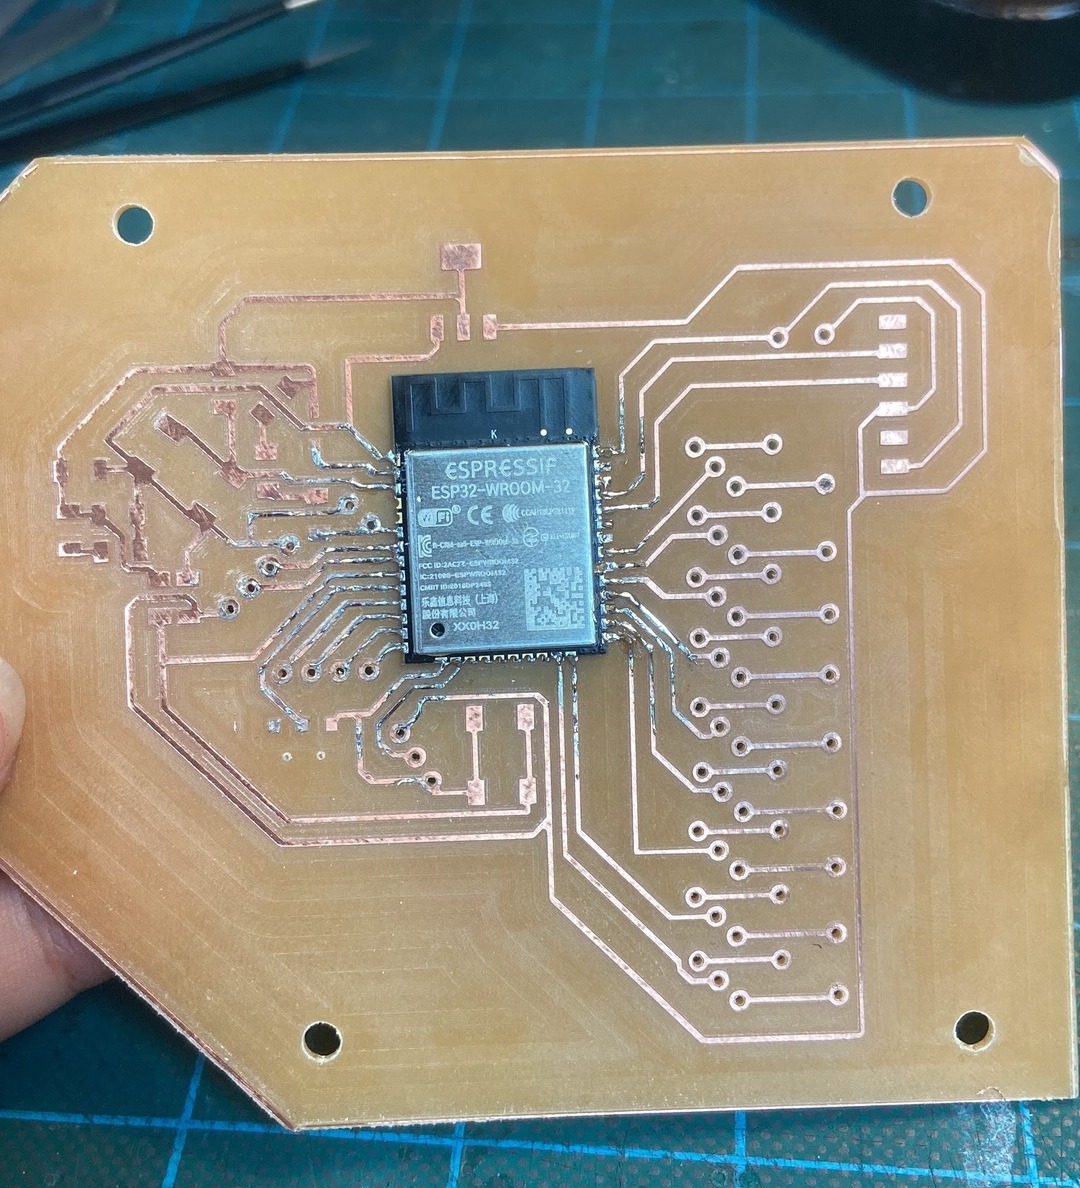 ESP32 soldered